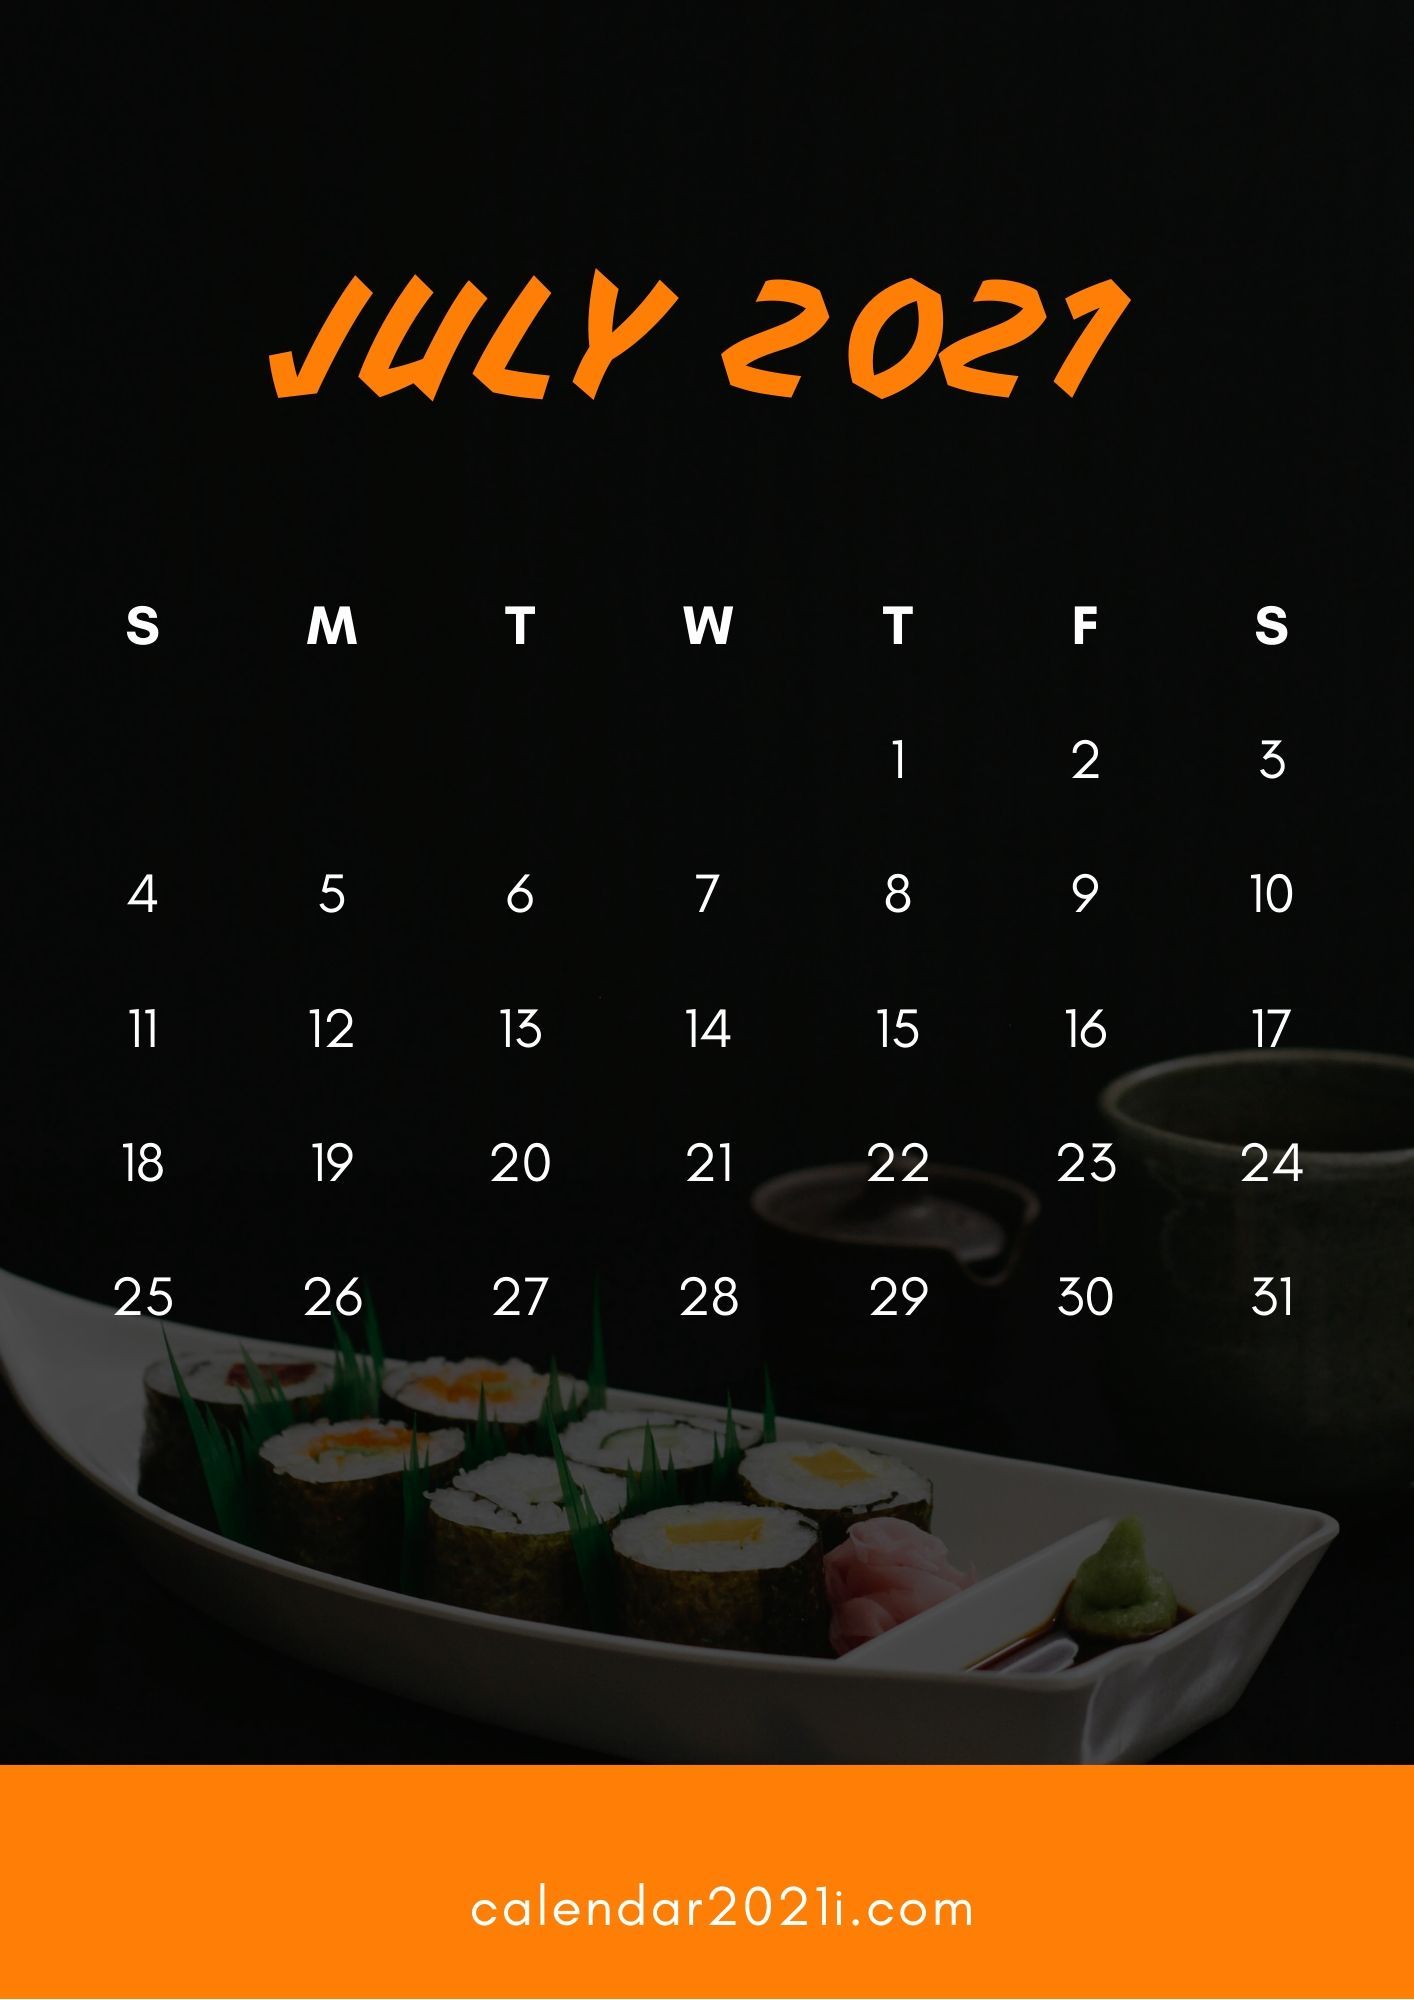 July 2021 Calendar HD Wallpaper for iPhone background in 2020 calendar, Calendar wallpaper, Calendar